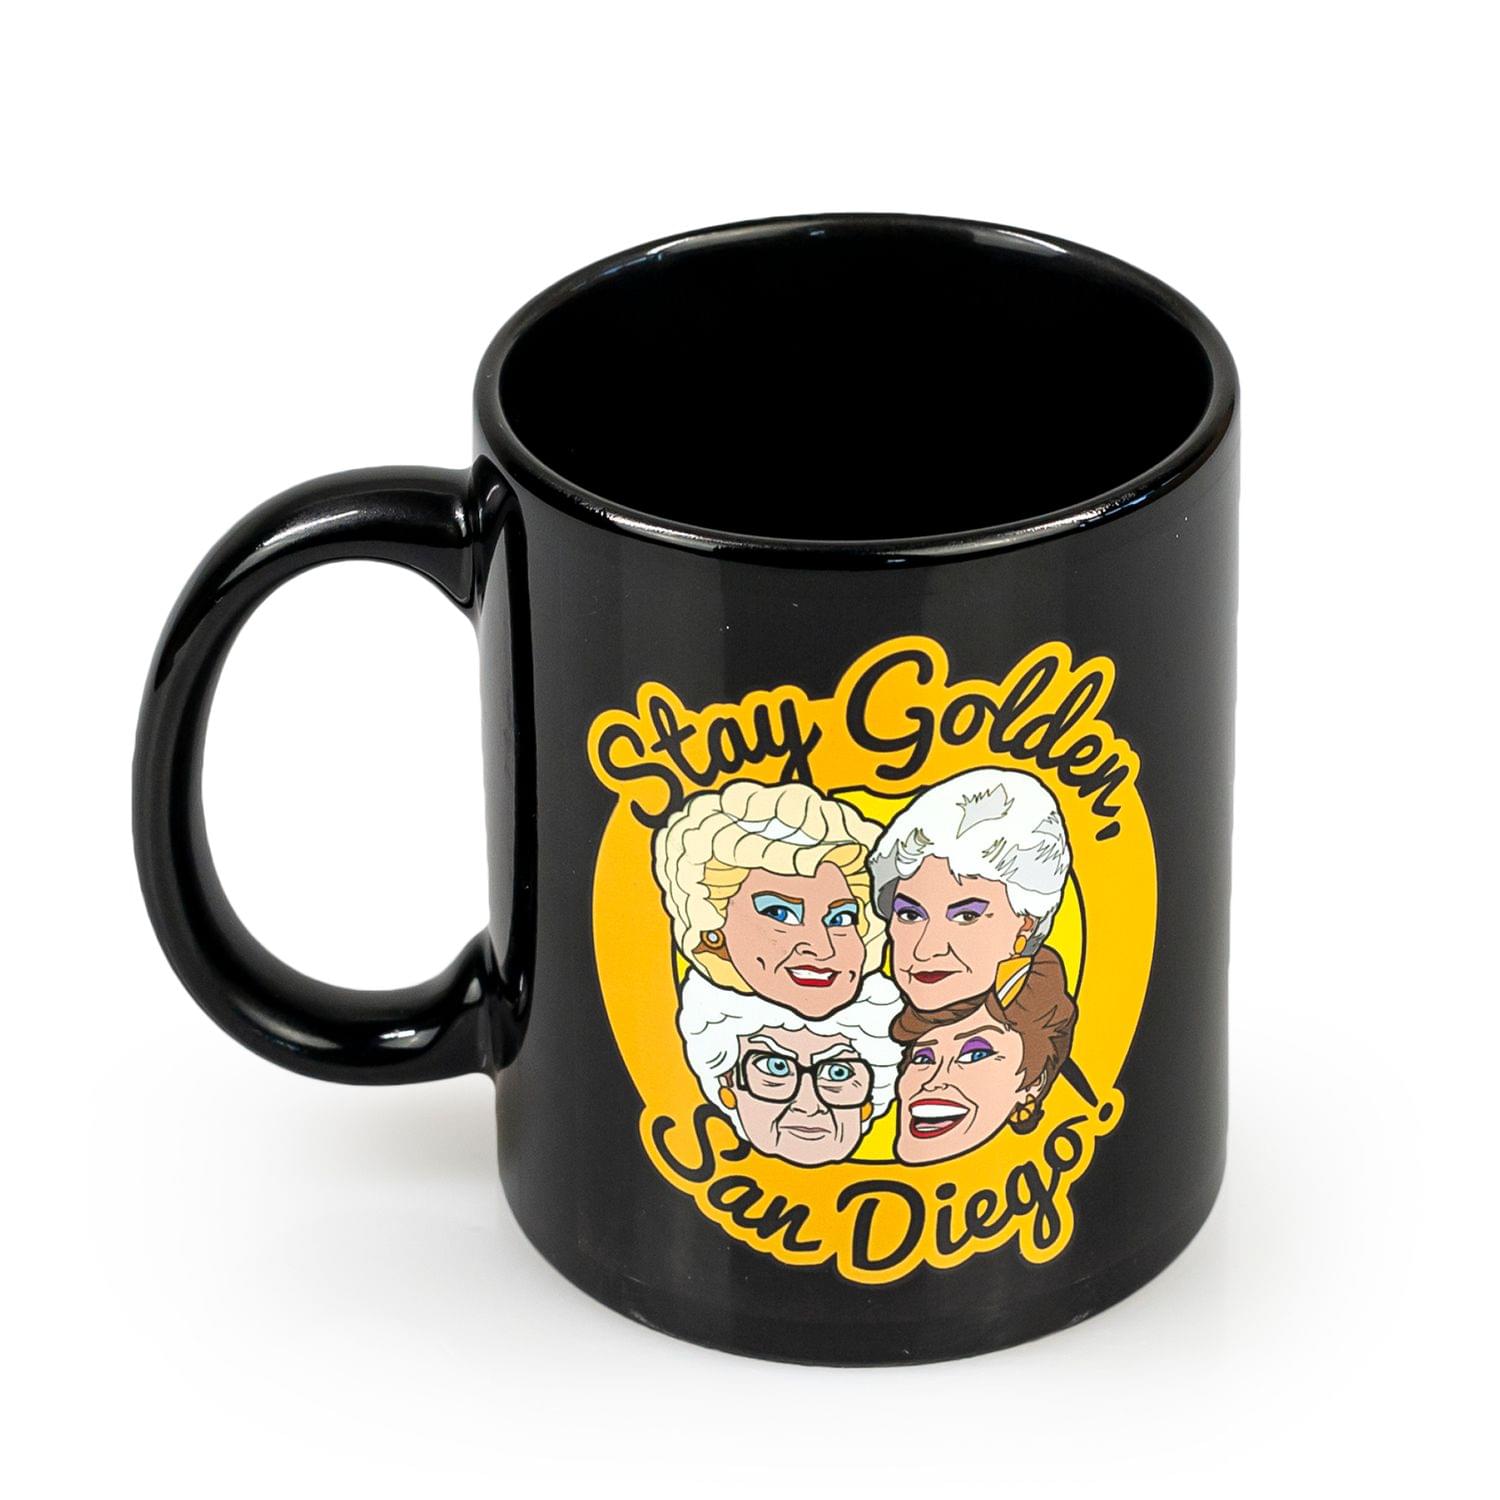 The Golden Girls Stay Golden San Diego Ceramic Mug | 11 Ounces| Golden Girls Mug